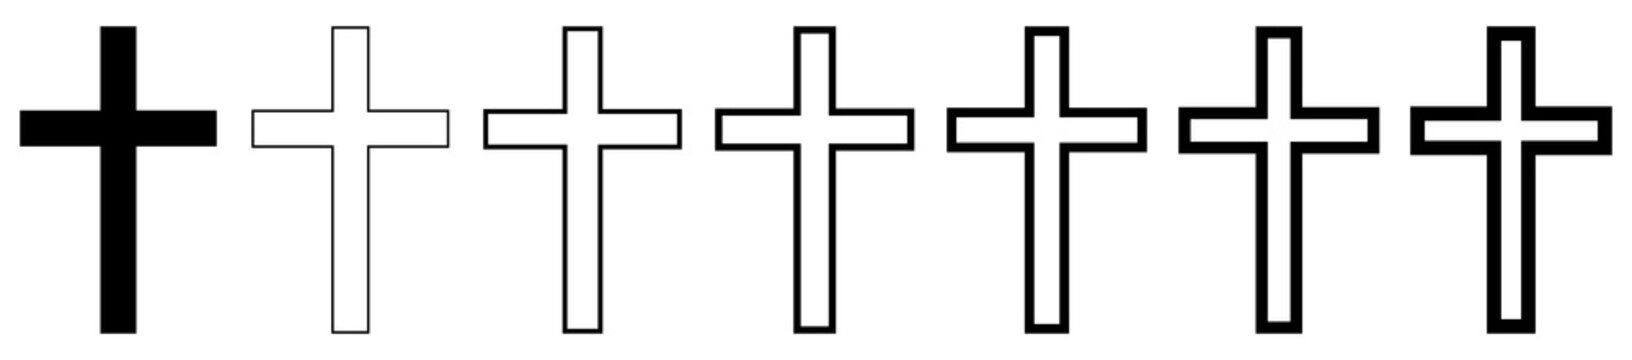 Christian cross icon set. Crucifix vector illustration isolated on white background.